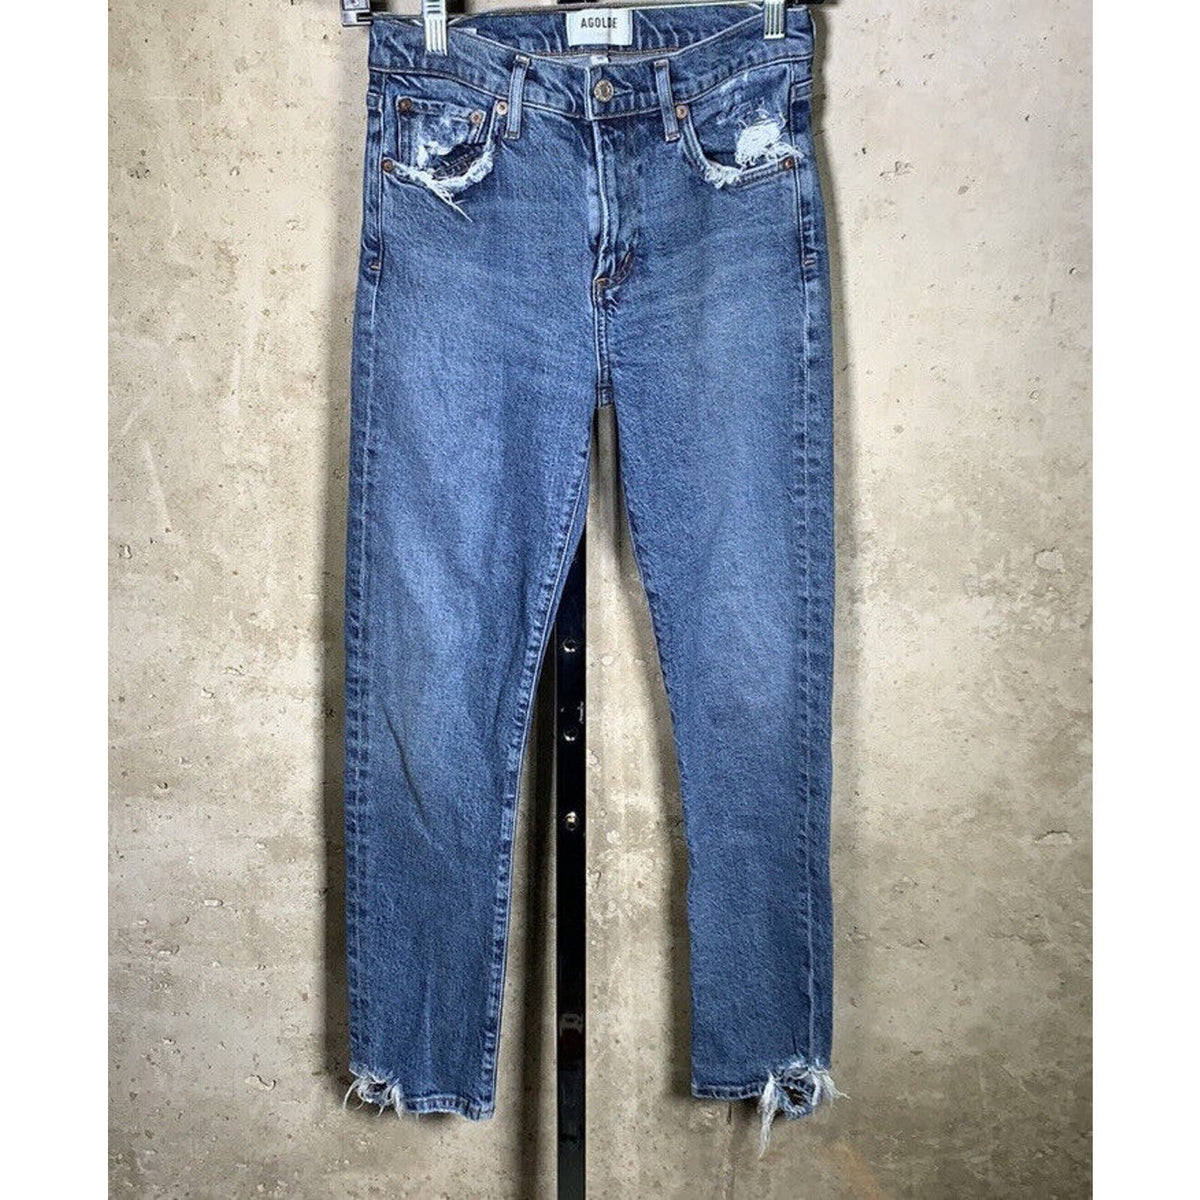 Agolde Toni Distressed Jeans Cut #52100 Sz.25